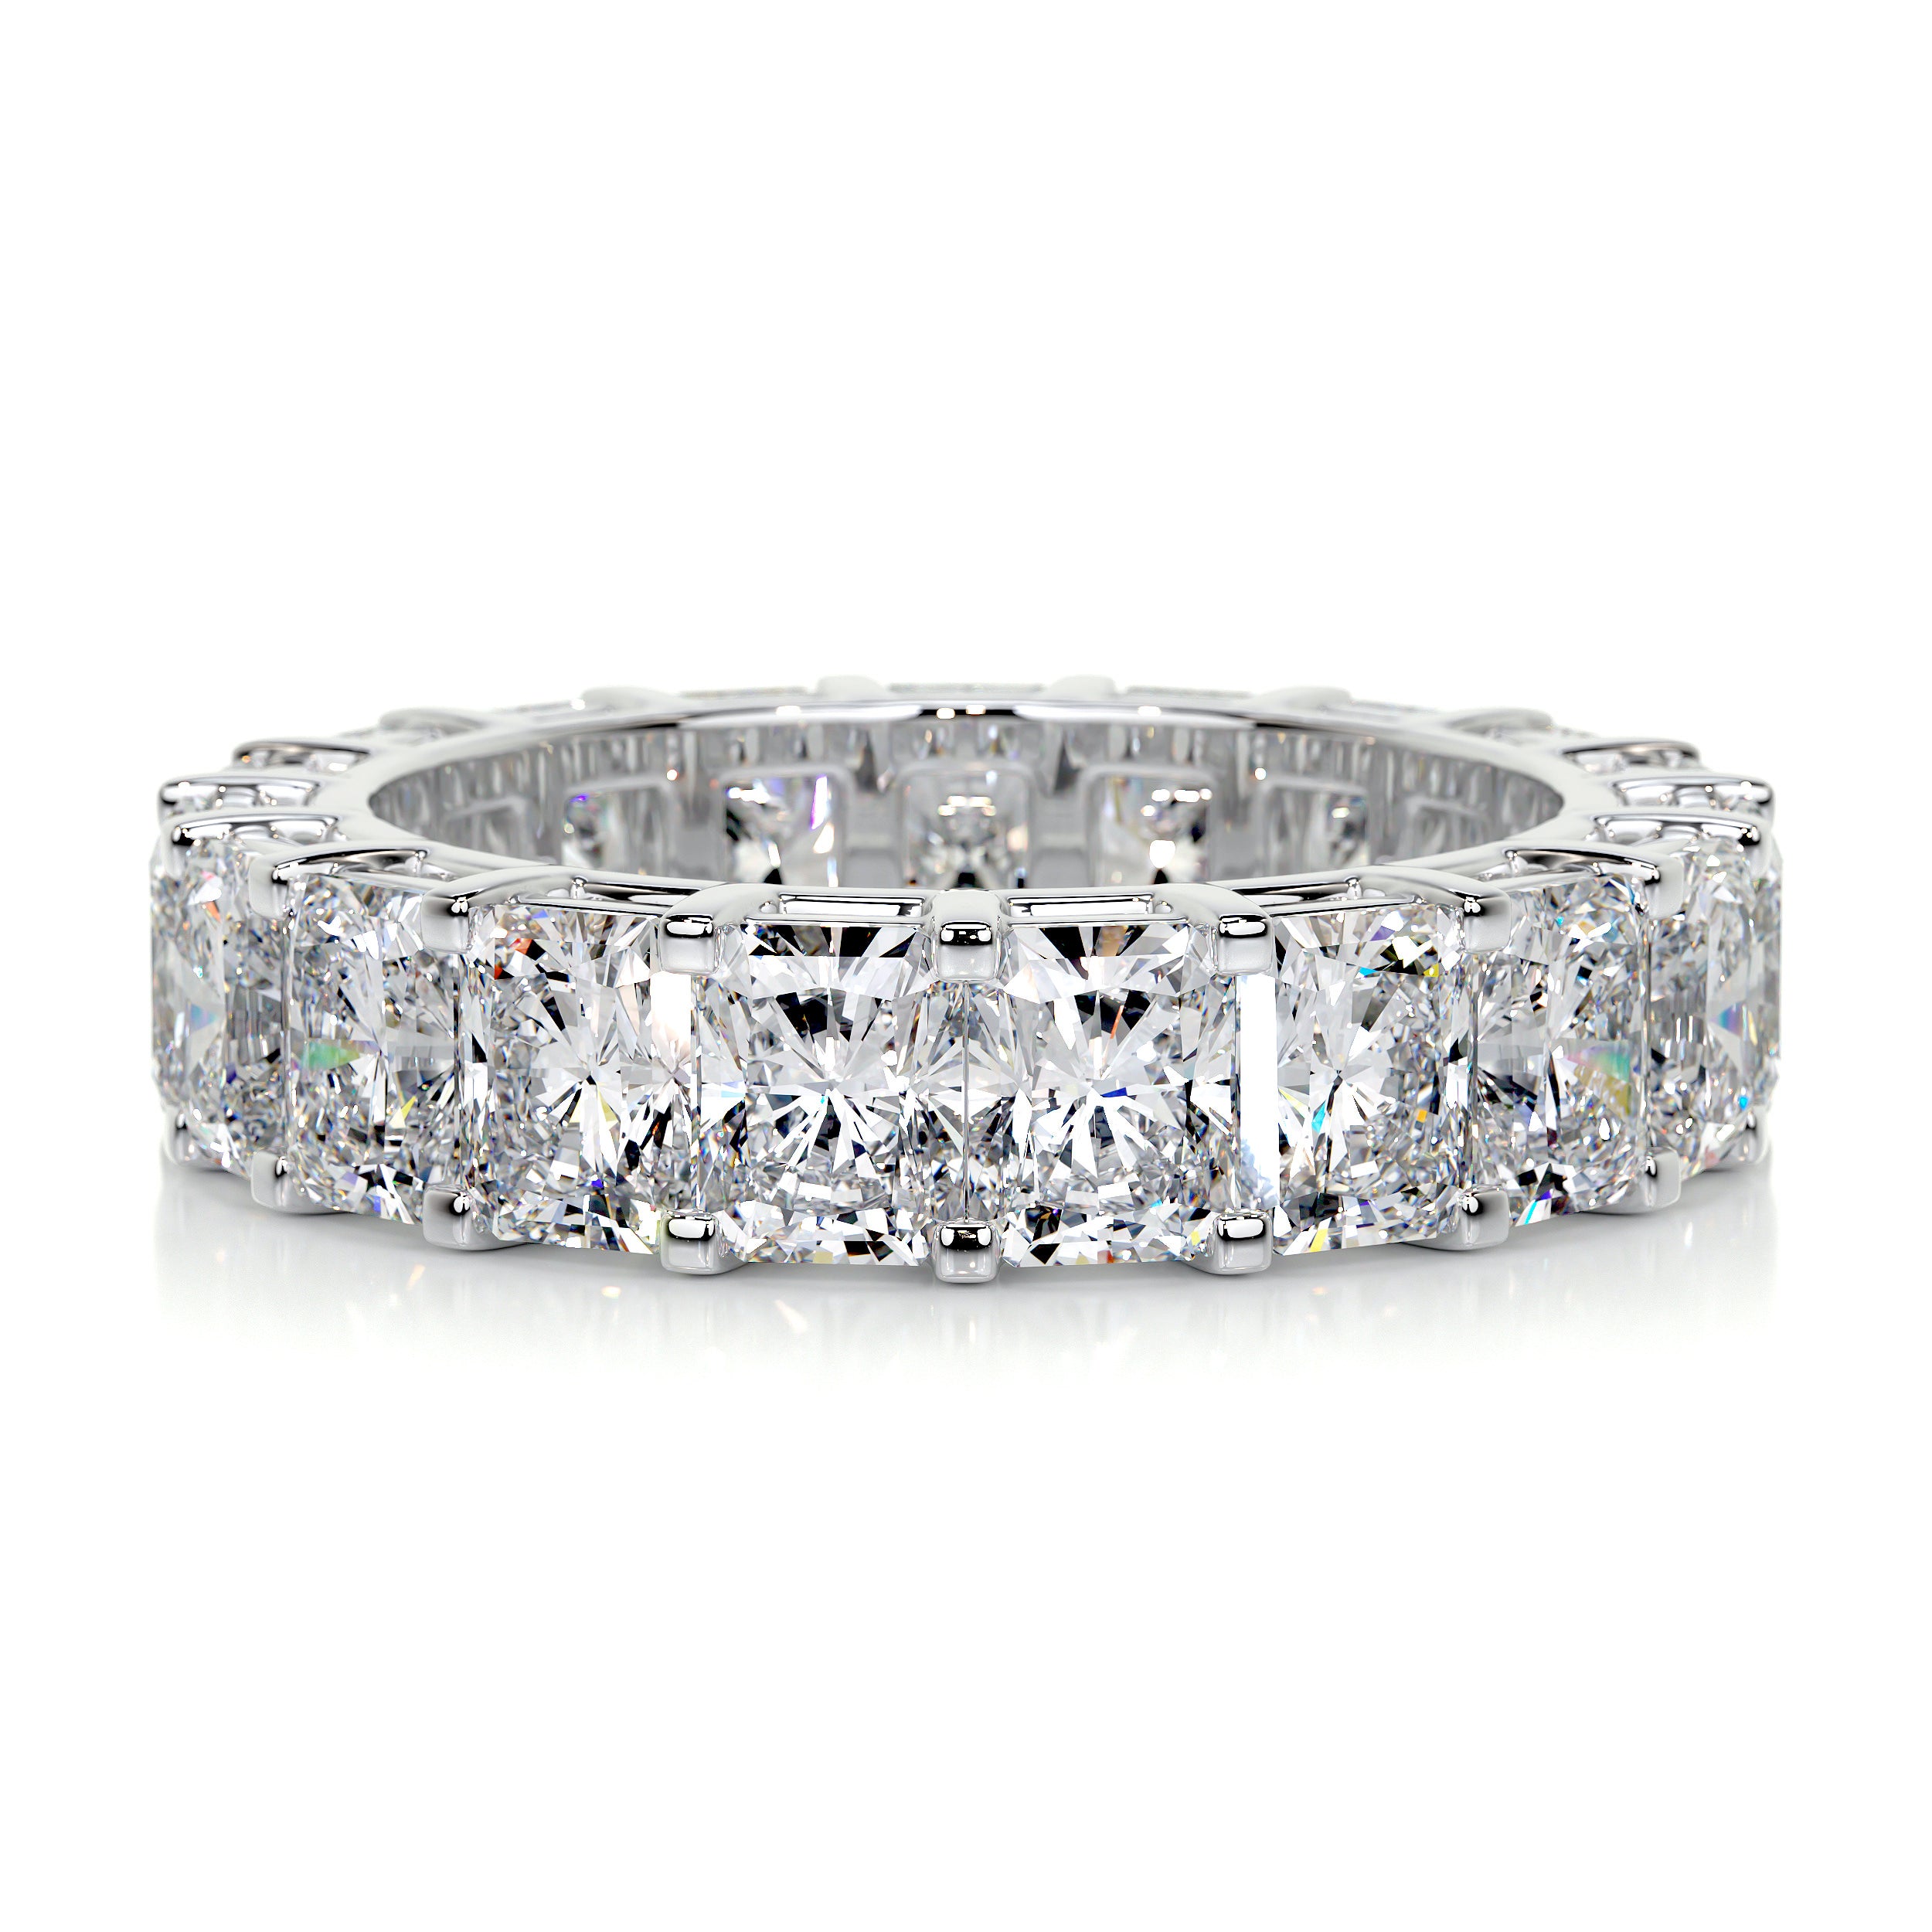 Andi Eternity Wedding Ring   (6 Carat) - 14K White Gold